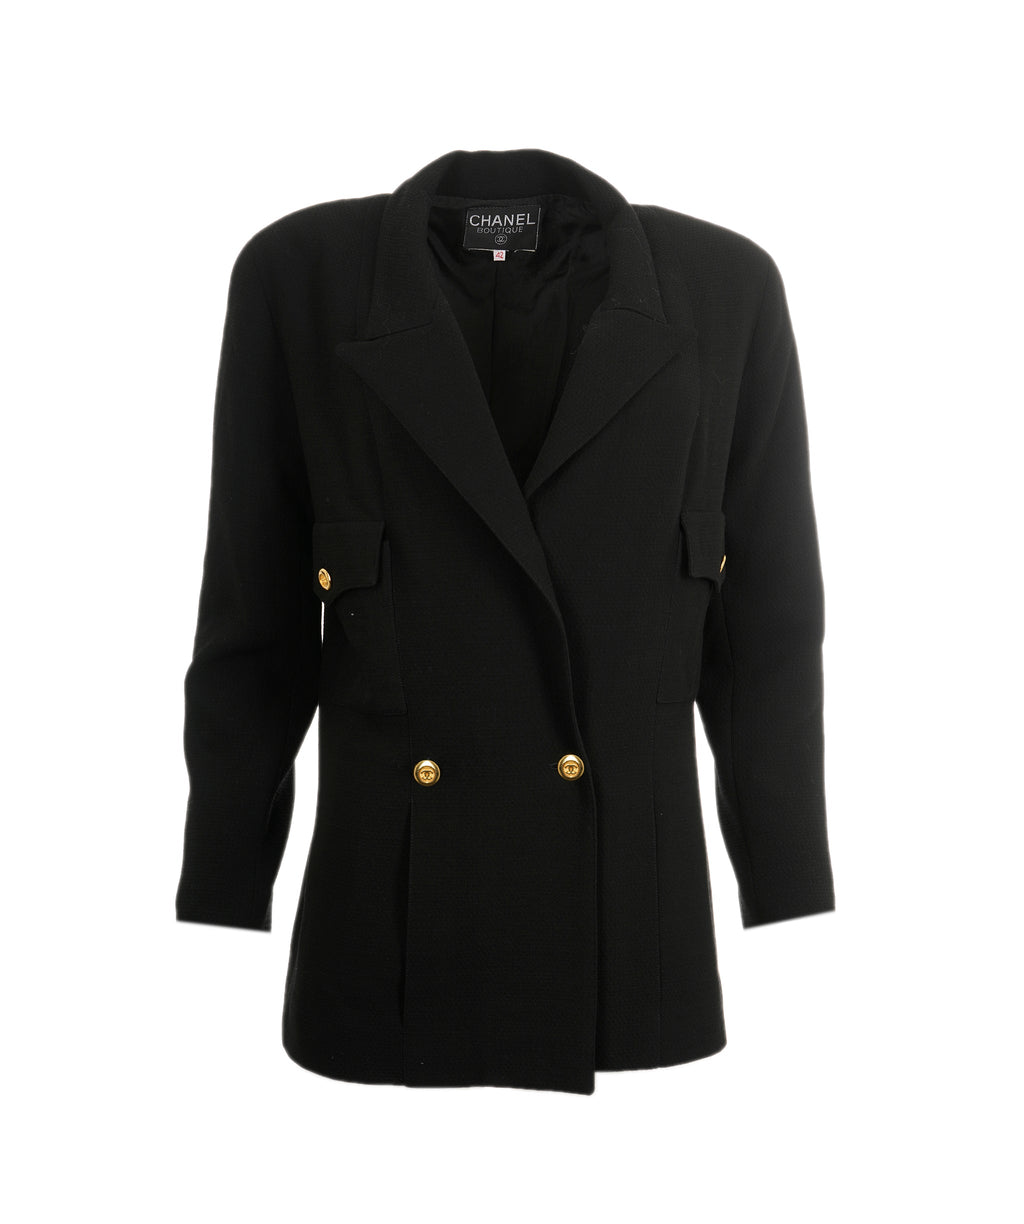 Chanel #42 Double Breasted Setup Suit Jacket Skirt Black 69512